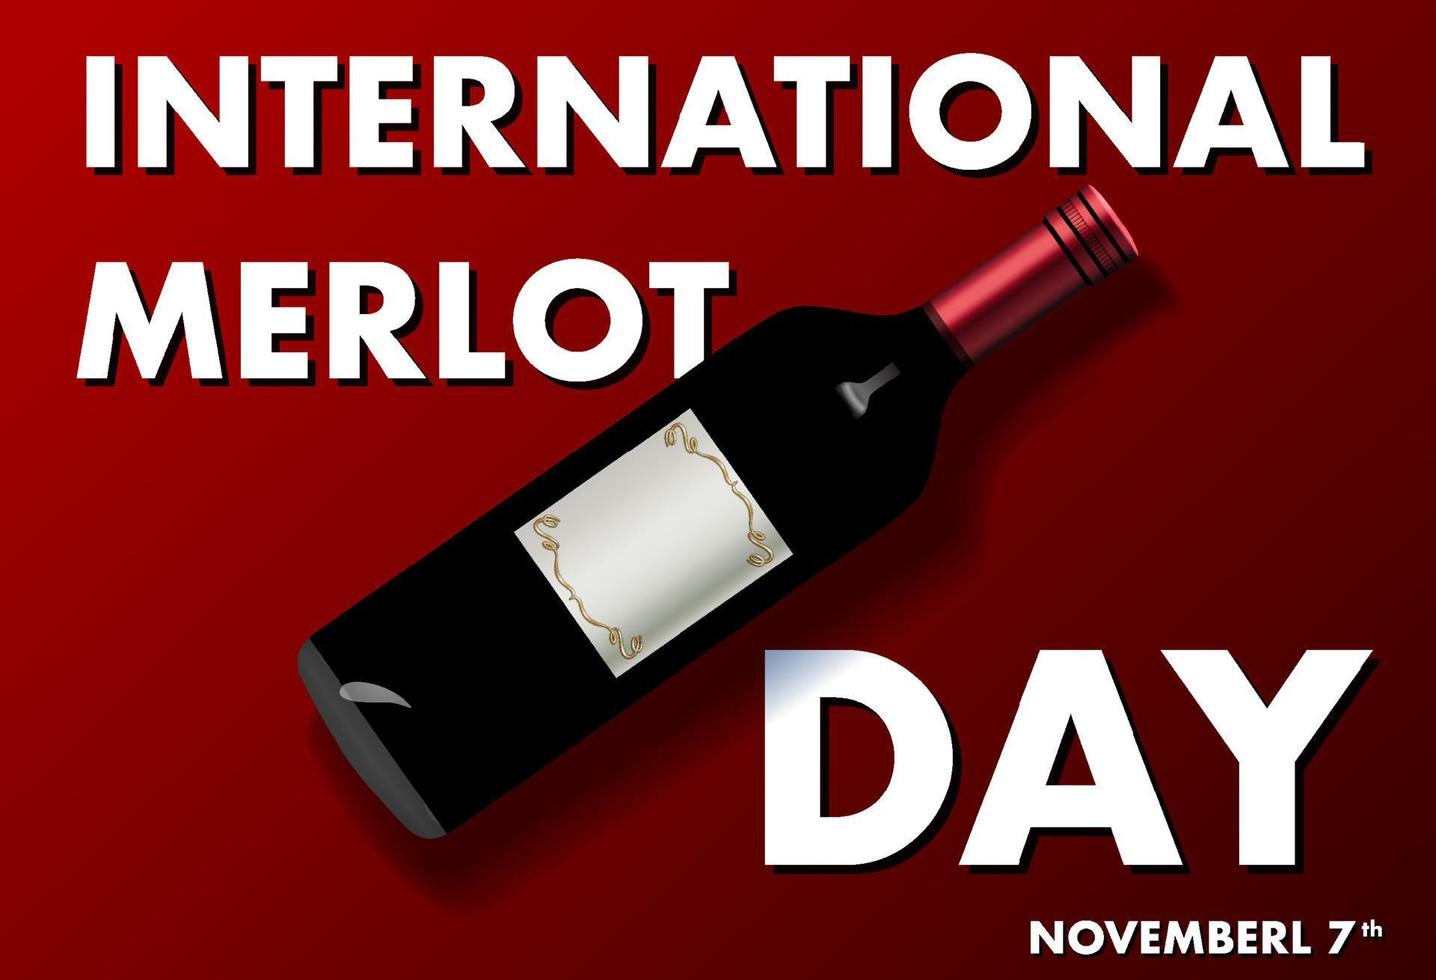 Intenational Merlot Day Poster Design vector